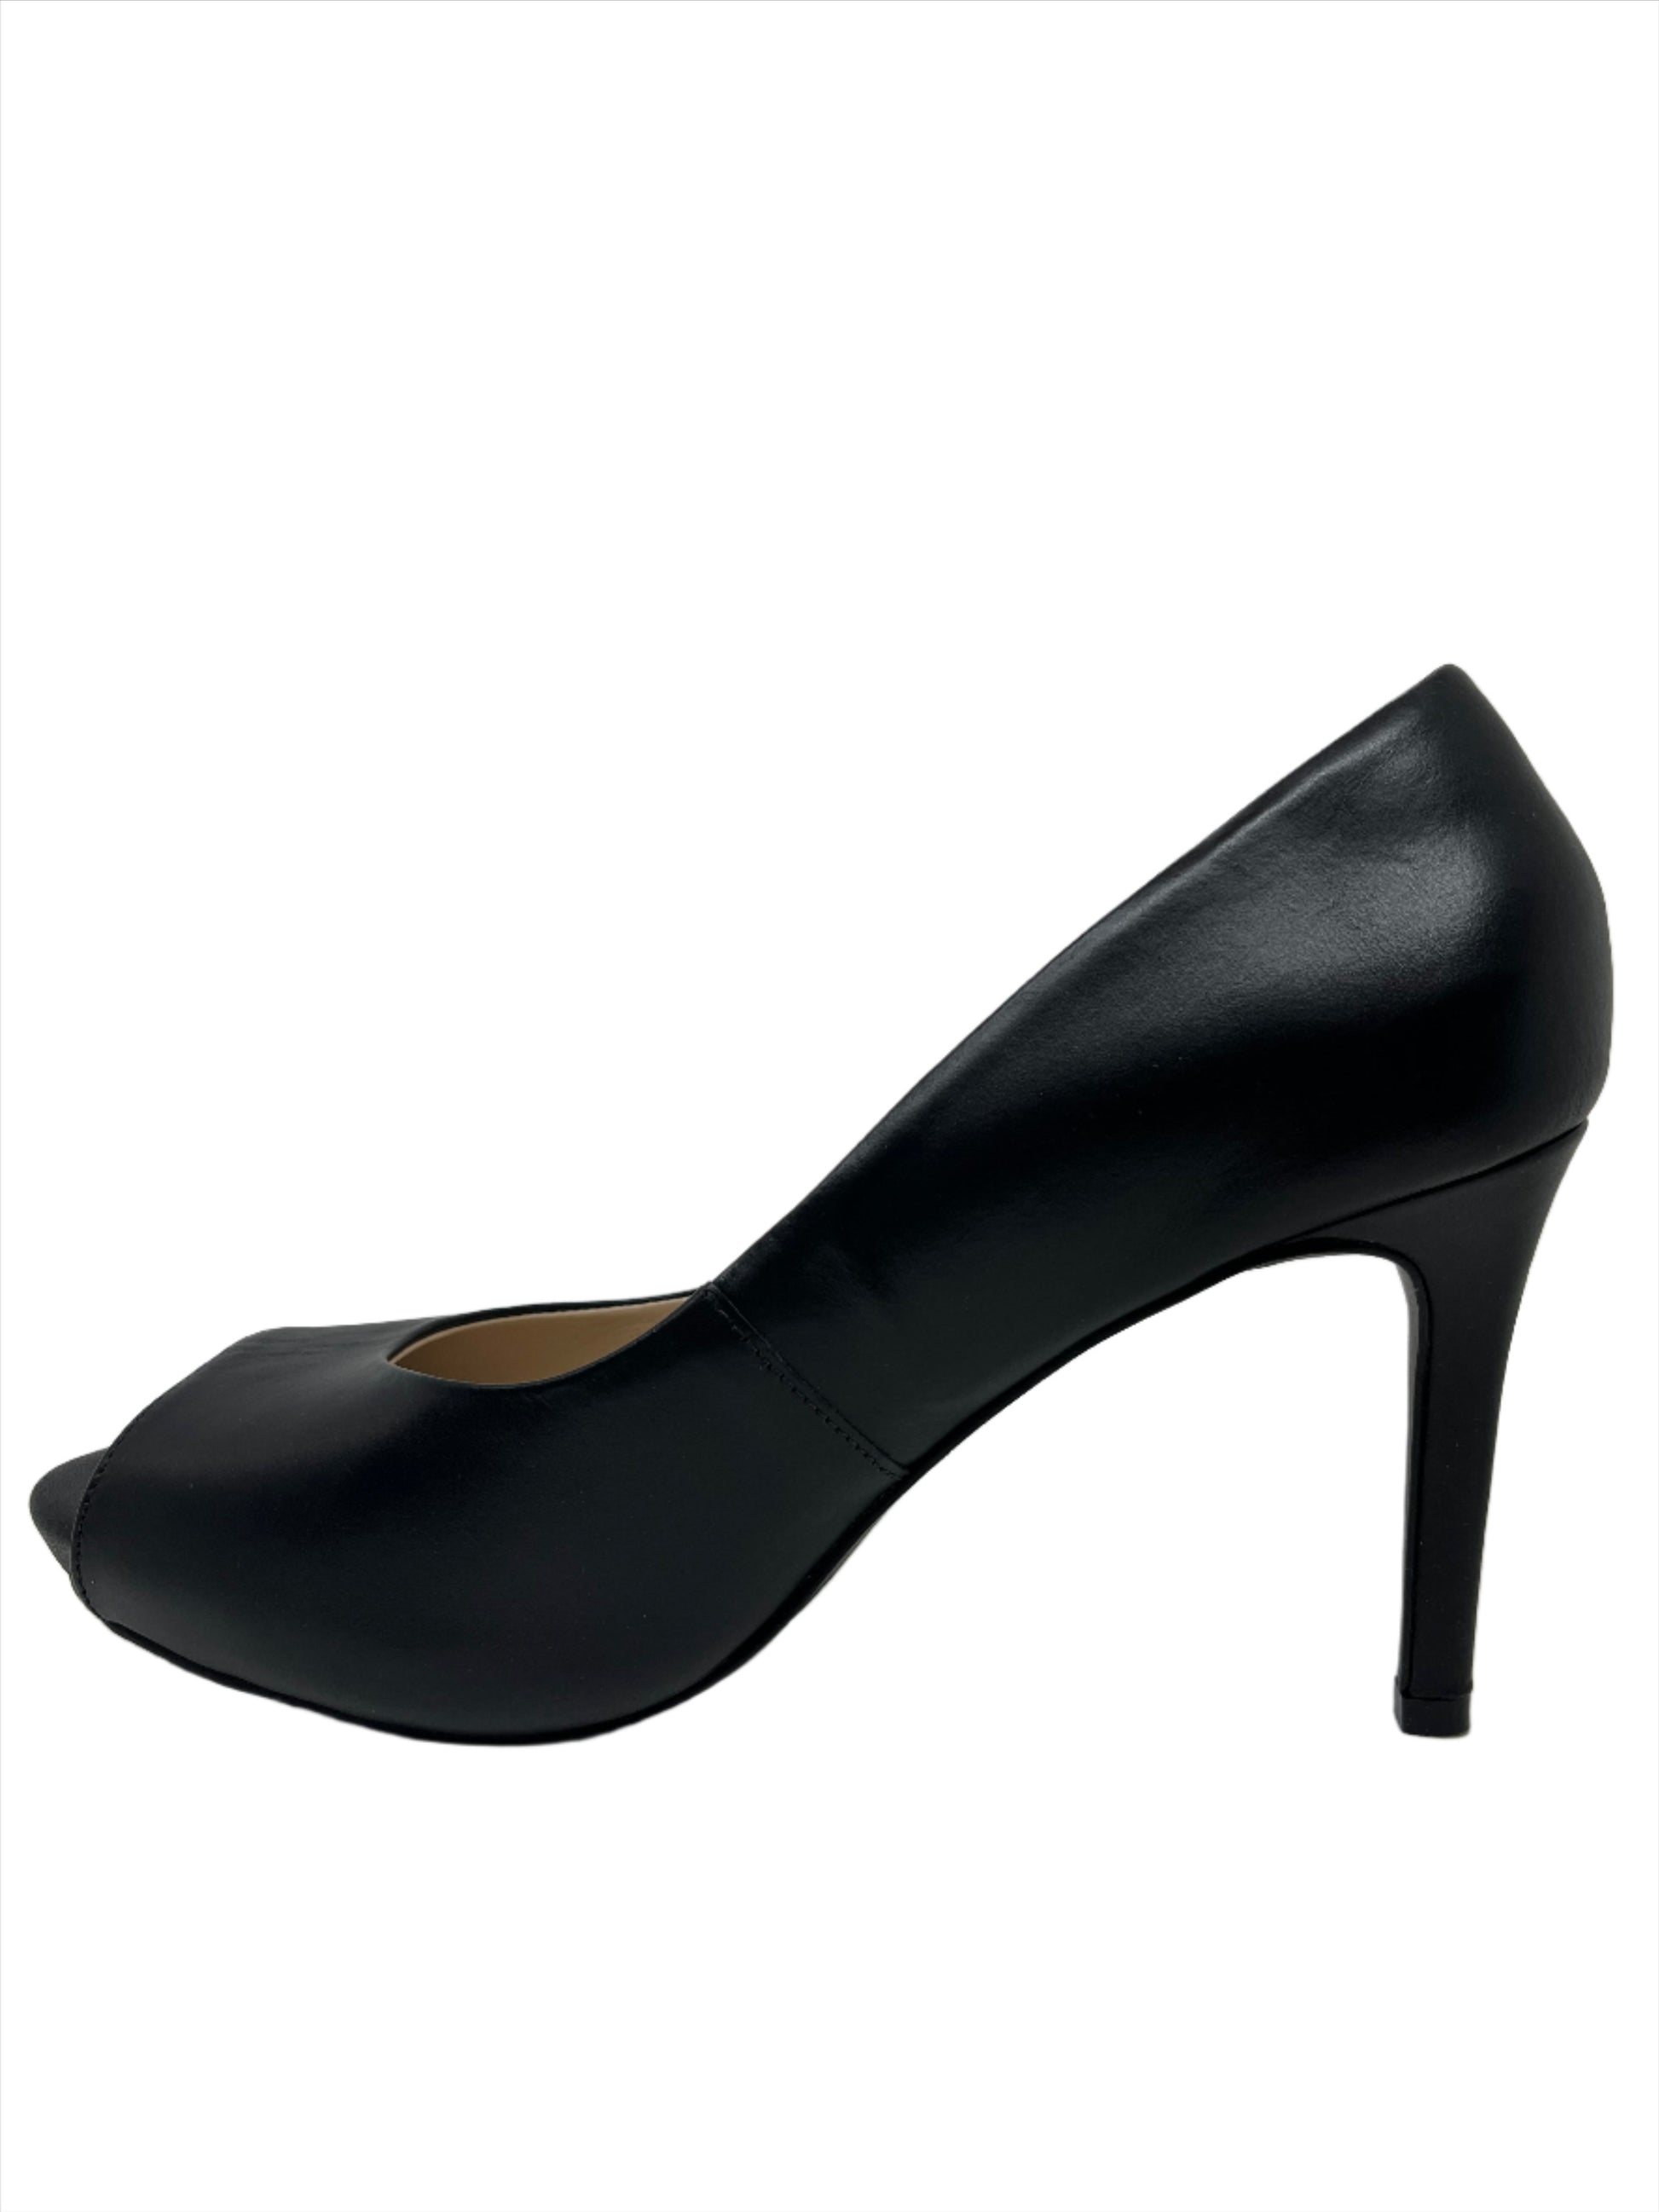 CONNIE PEEPTOE HEEL - BRAZILIO - 1640506, womens footwear - Stomp Shoes Darwin